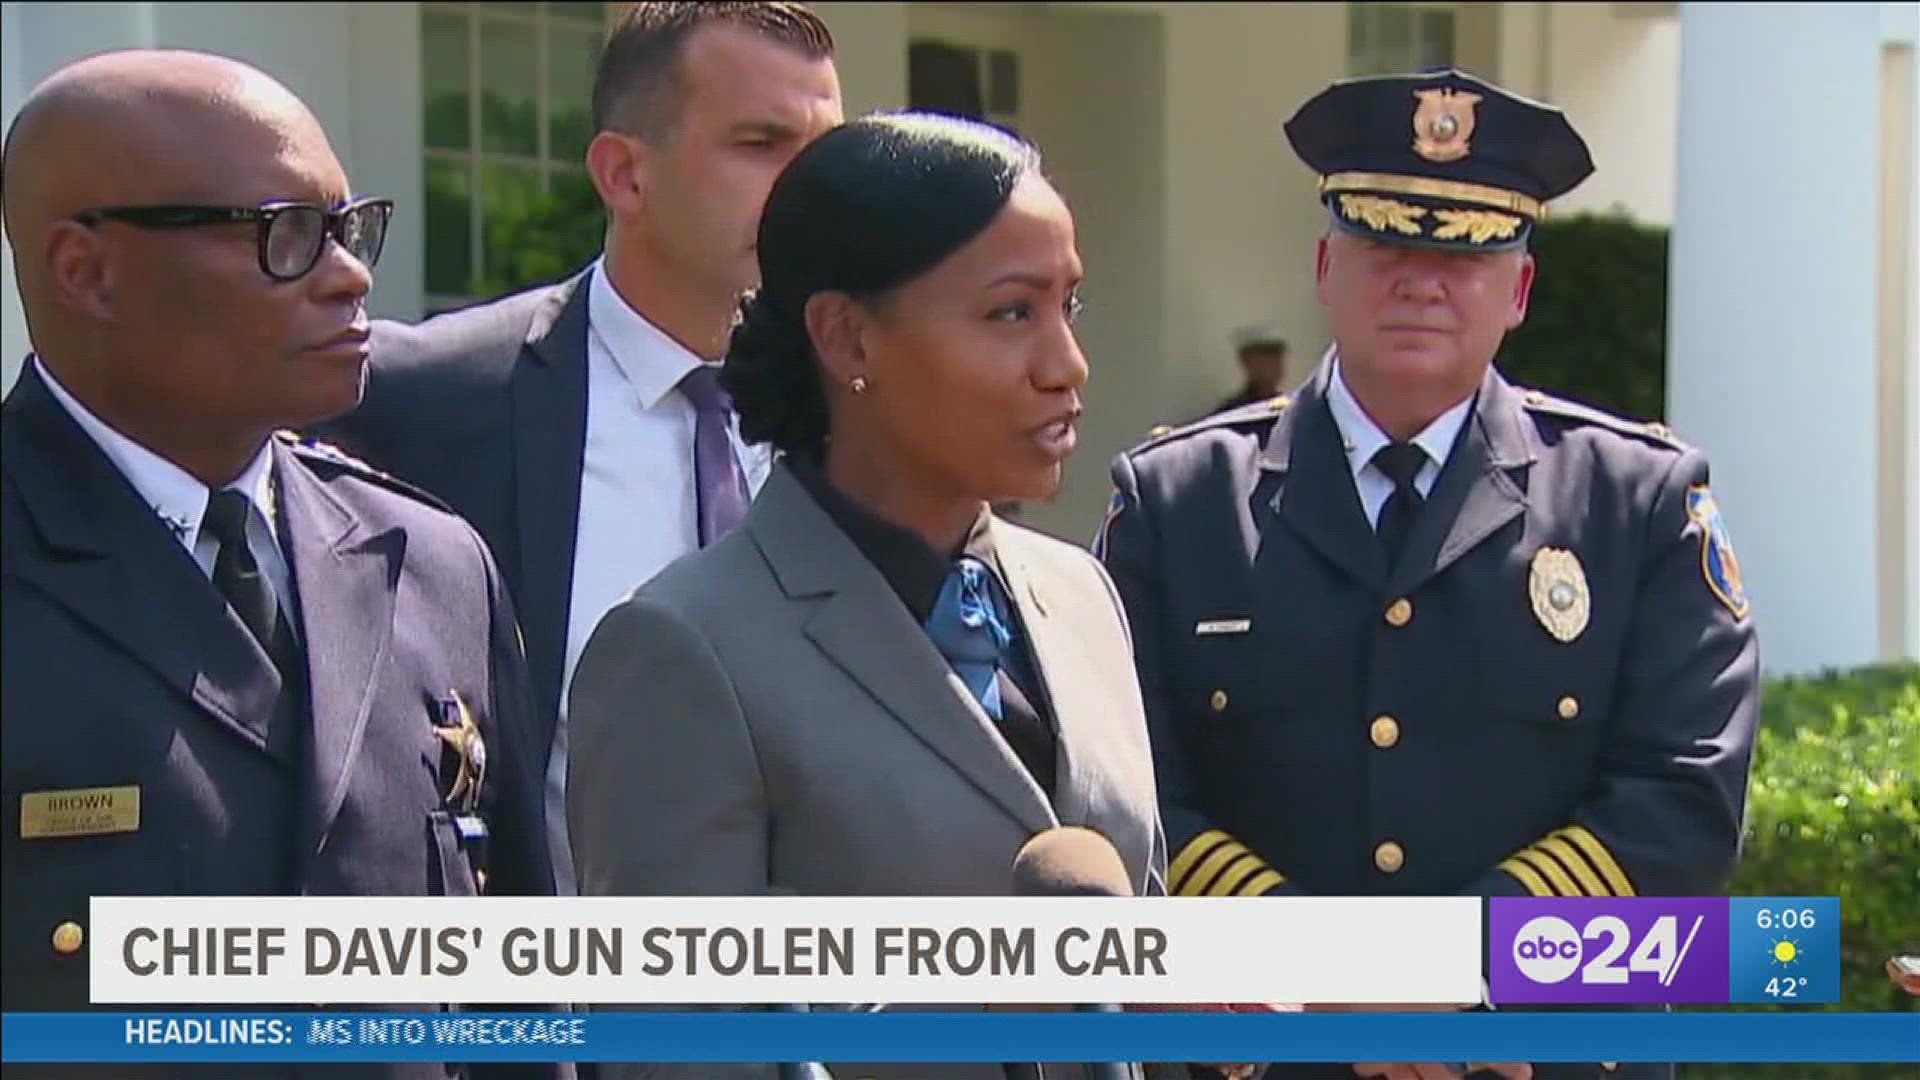 The gun was Davis' secondary duty weapon, which was locked in the car in a gun lockbox.